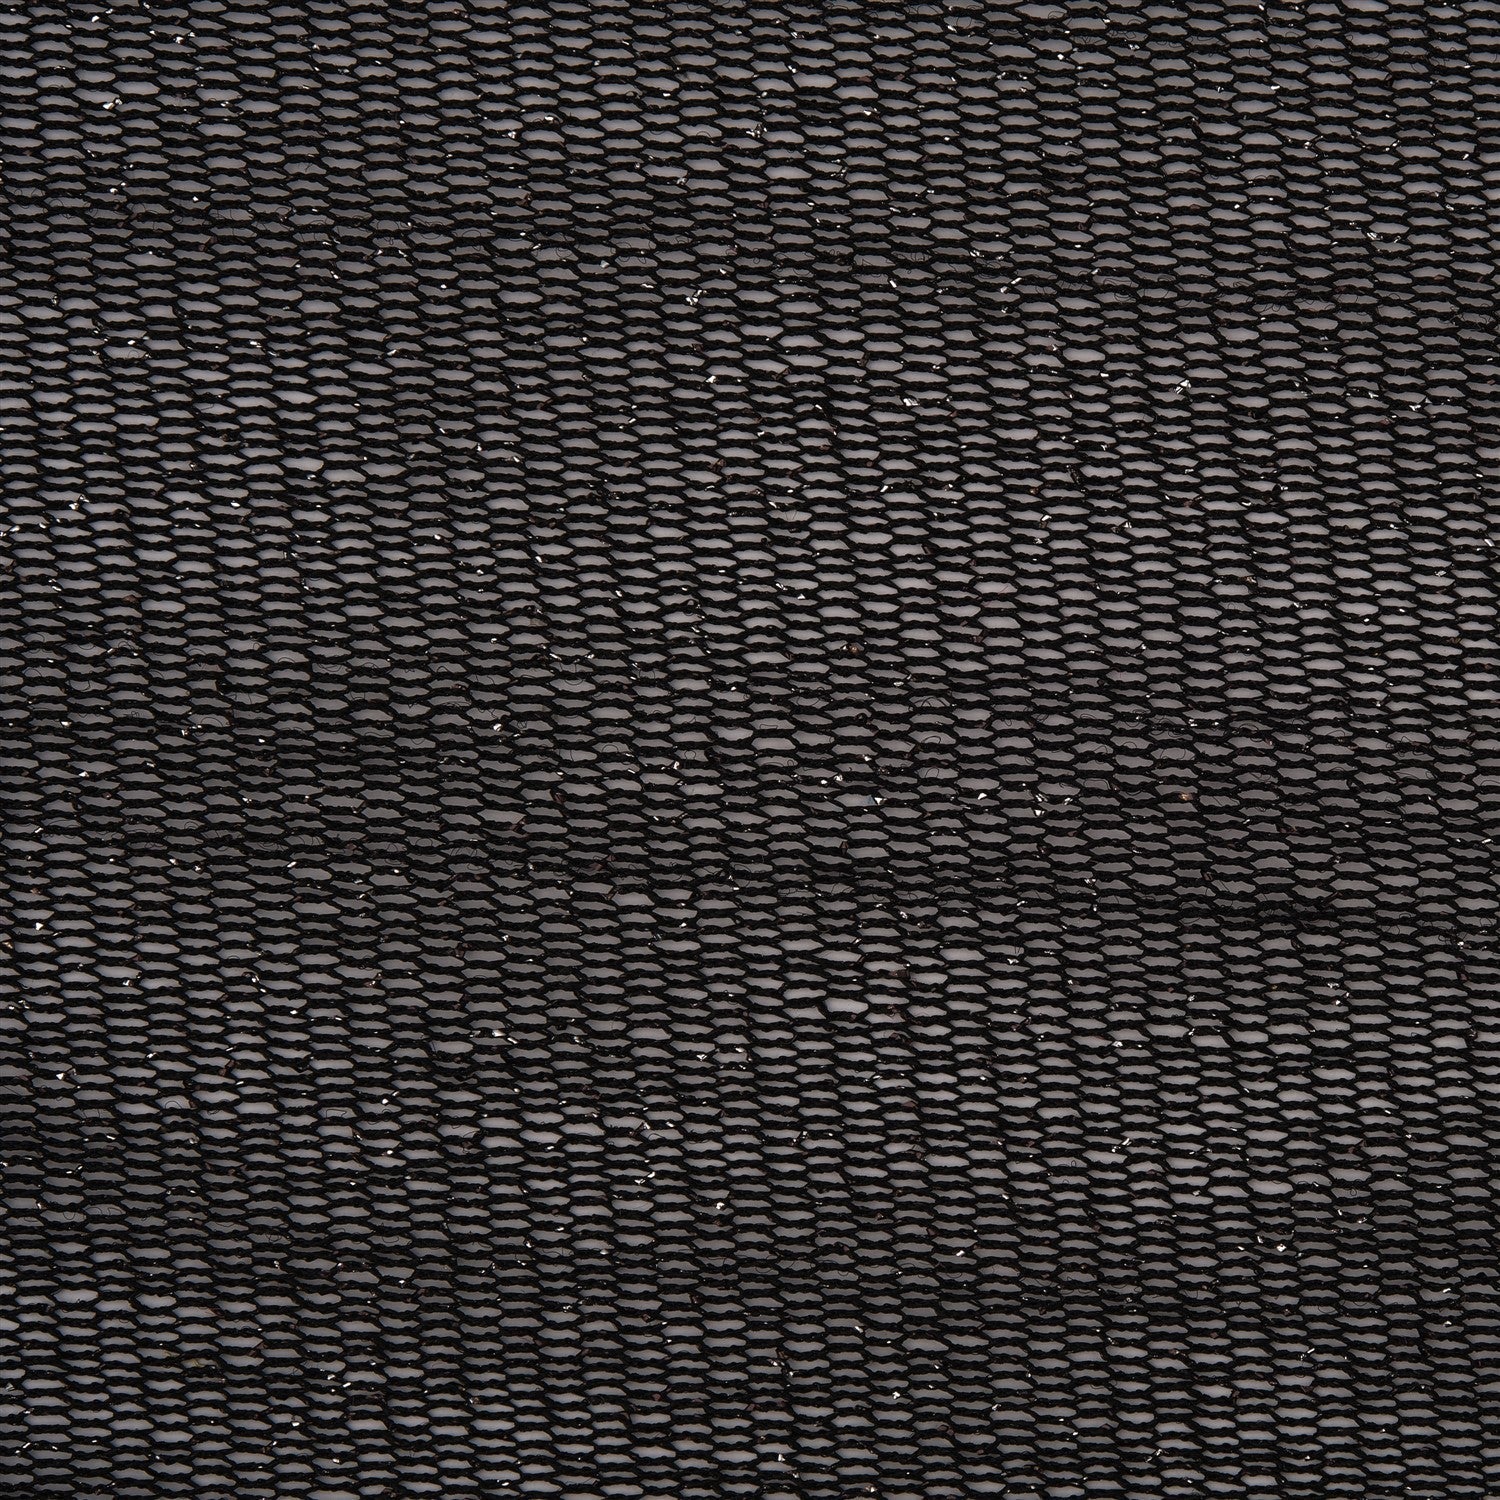 Metallic Tulle Fabric